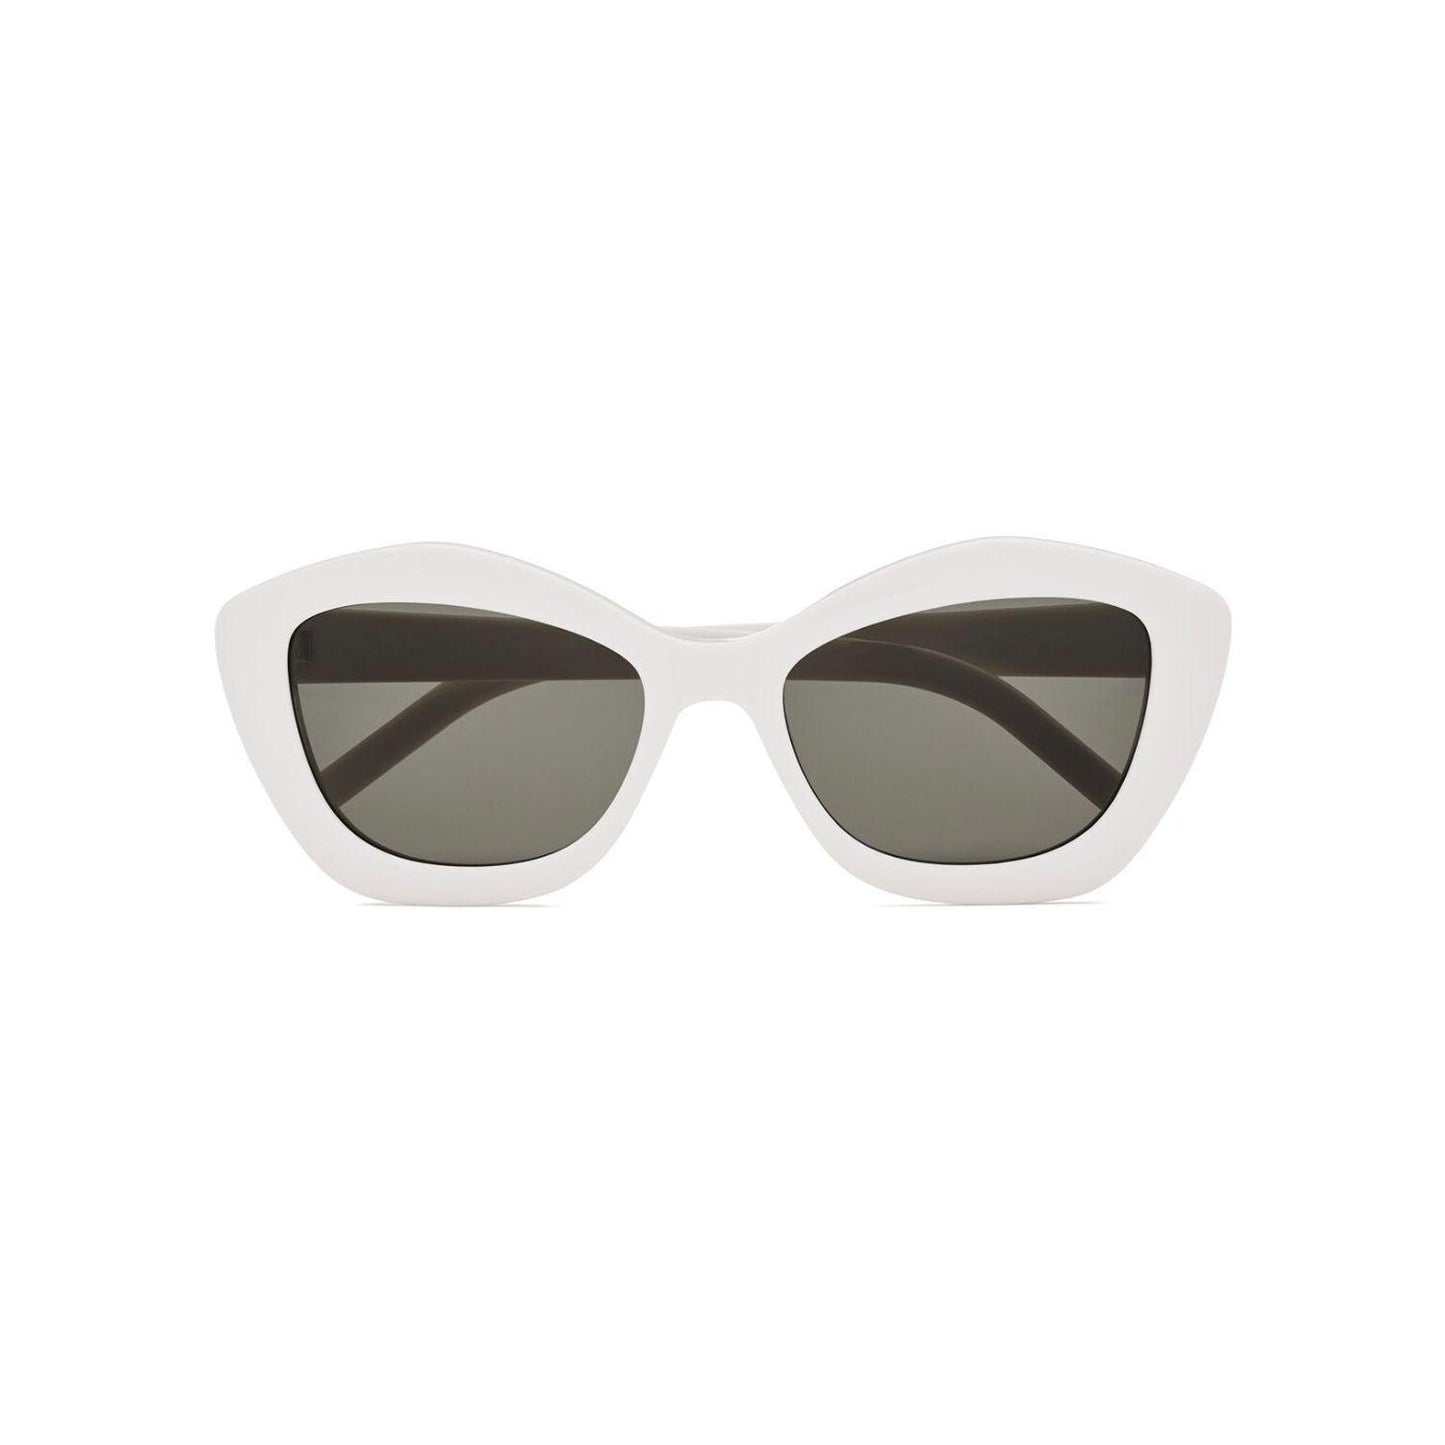 Yves Saint Laurent - SL68-003/004 - oculosopticaonline